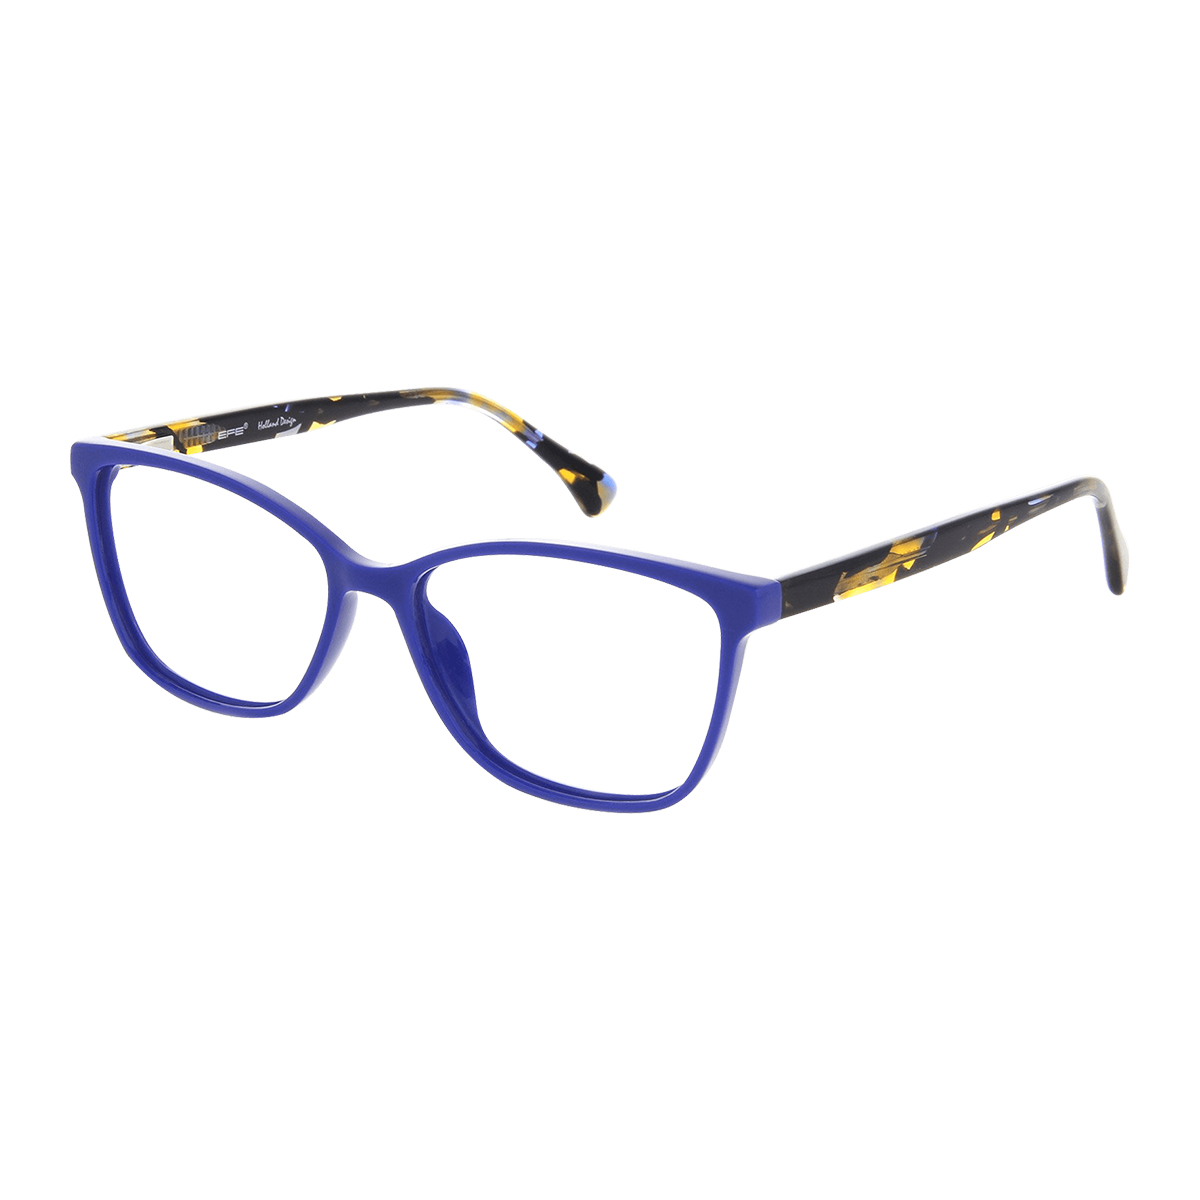 Tanais - Square Blue Reading Glasses for Women